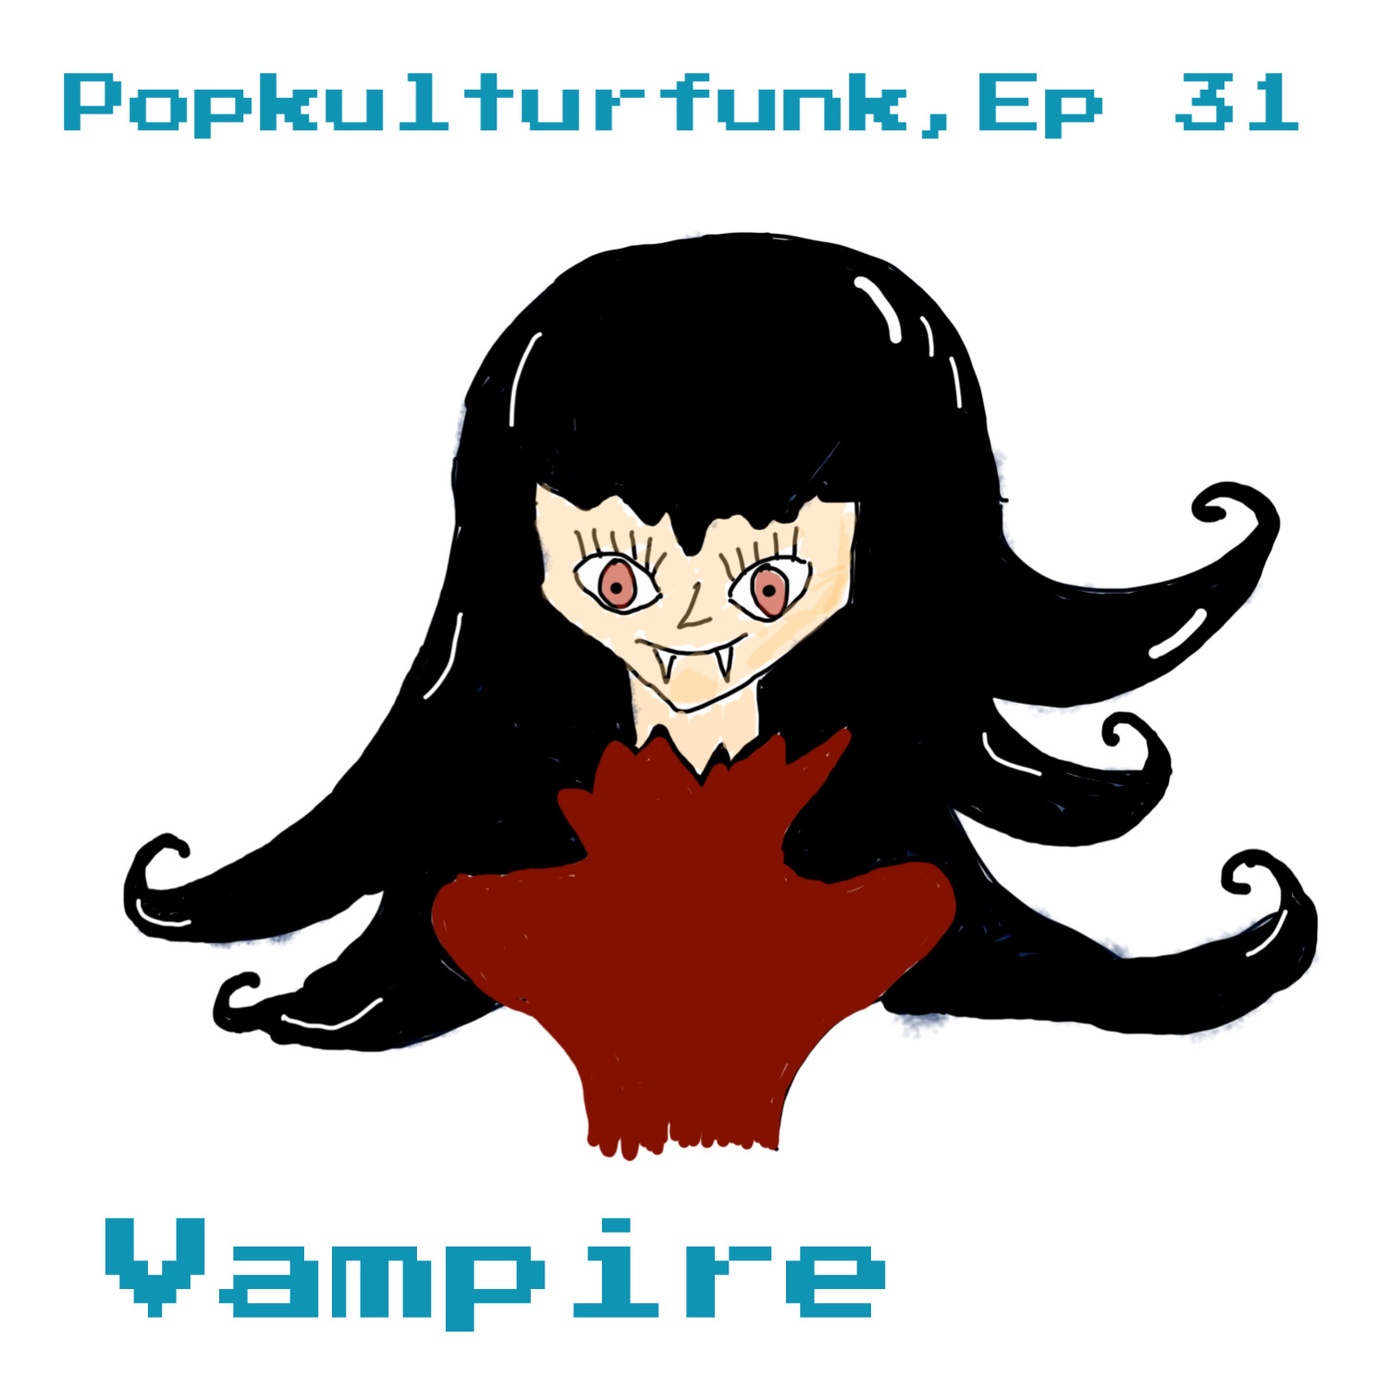 Episode 31: Vampire